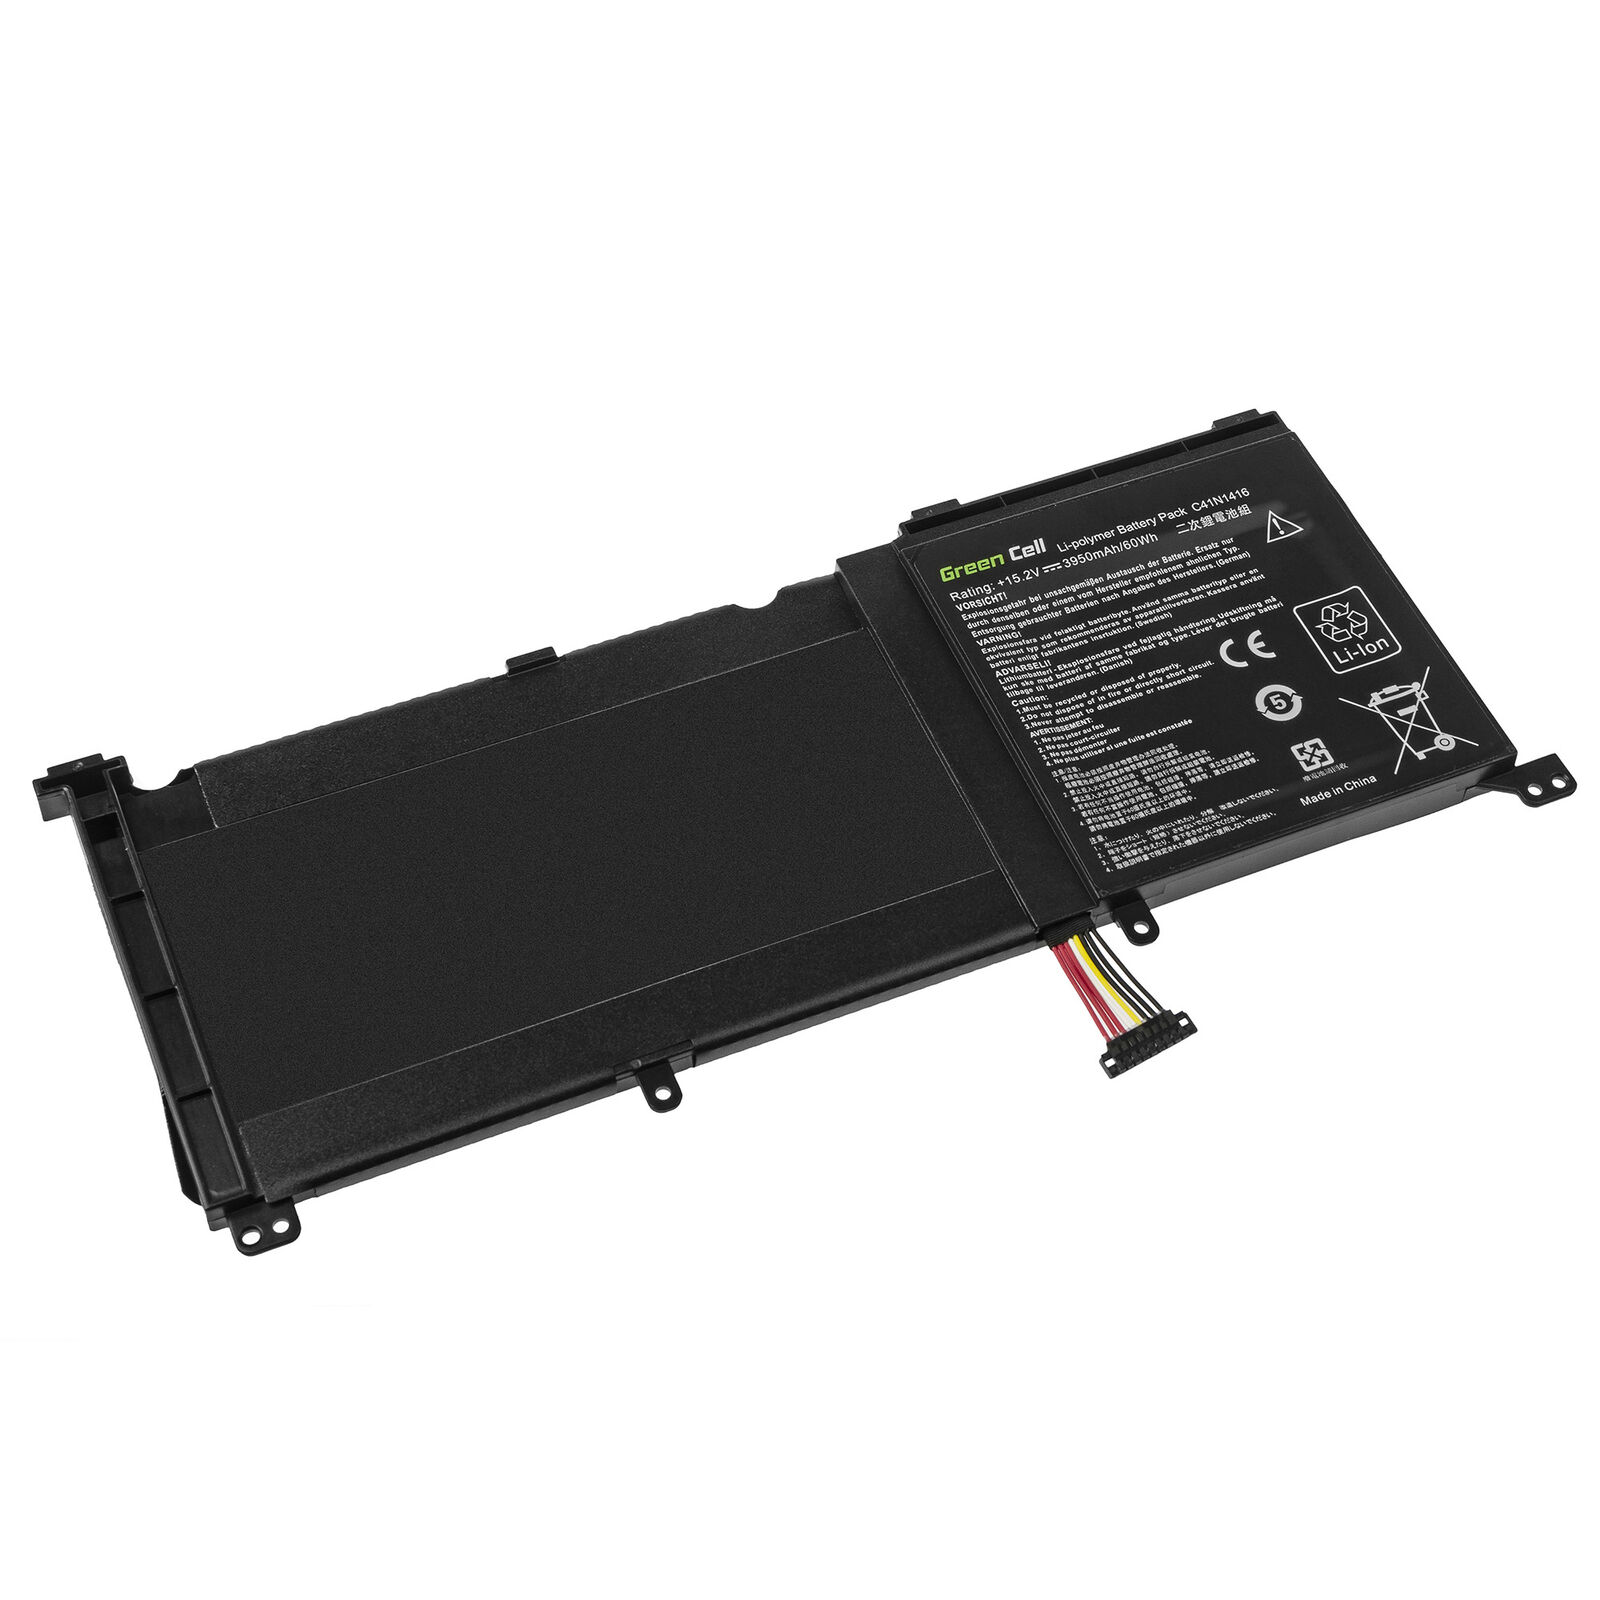 C41N1416 Asus ZenBook G501 G501VW G501VJ G501JW UX501V G601J N501L kompatybilny bateria - Kliknij obrazek, aby zamkn±æ